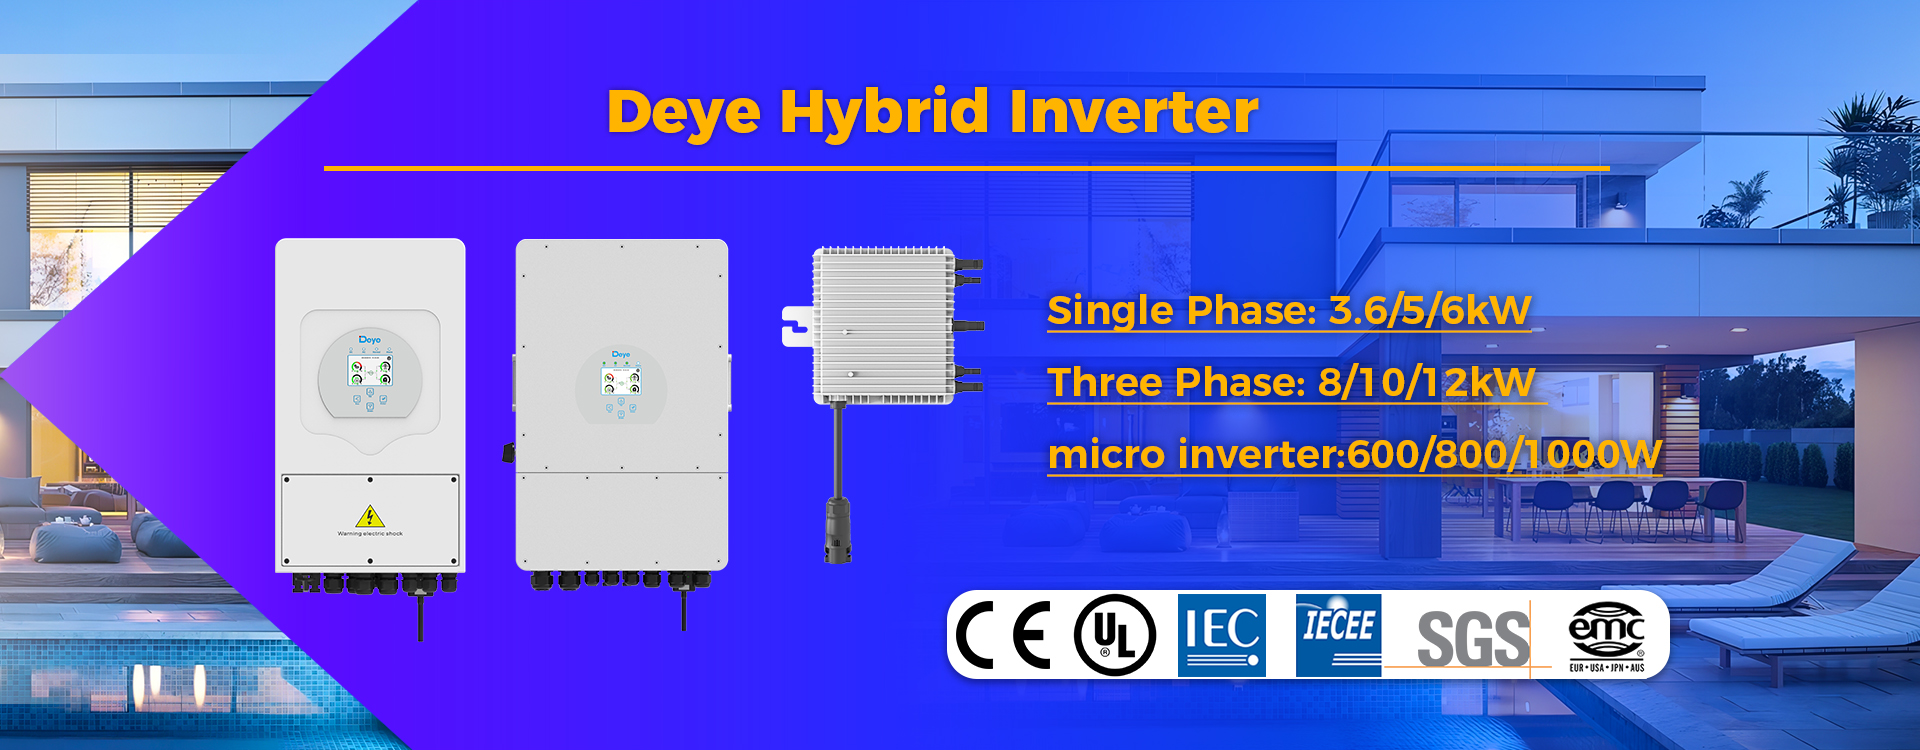 microinverter inverter ibrido deye